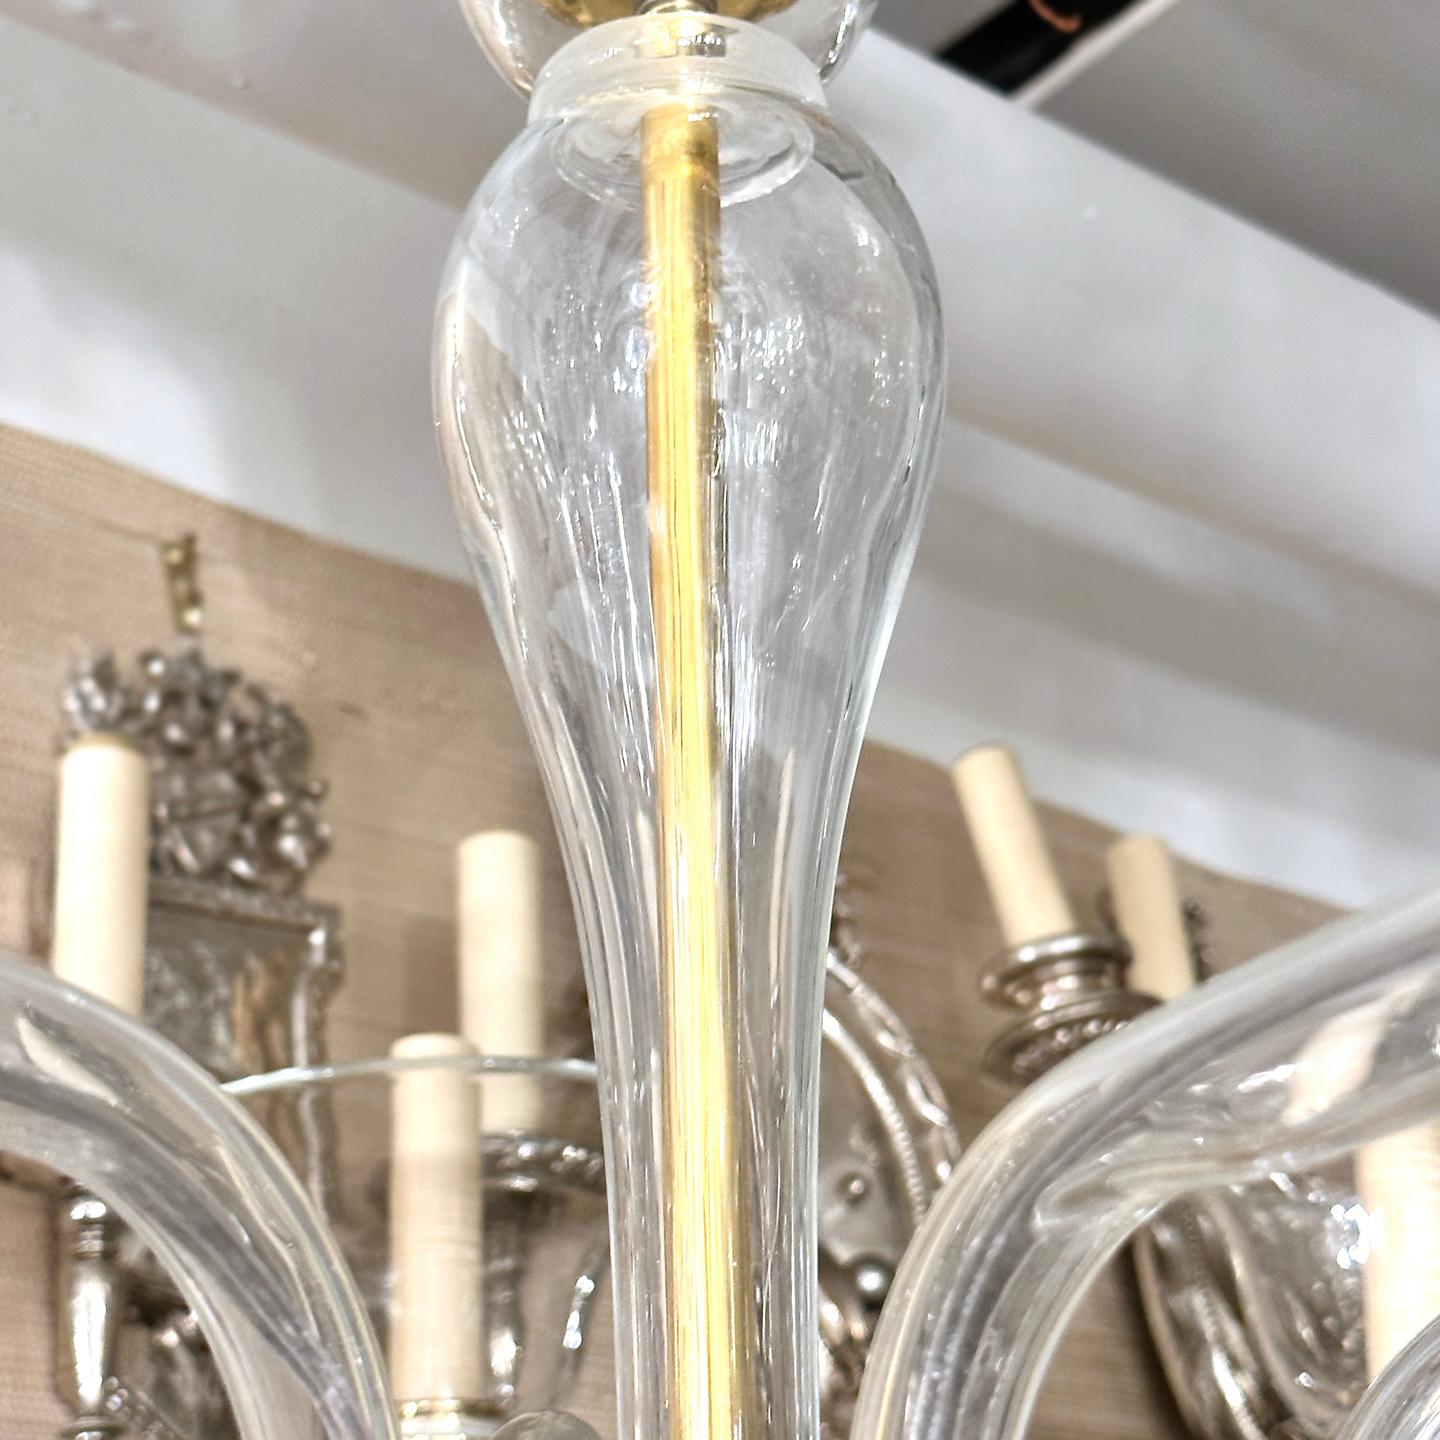 Circa 1960's Italian Clear Murano glass eight-arm chandelier.

Measurements:
Diameter: 36